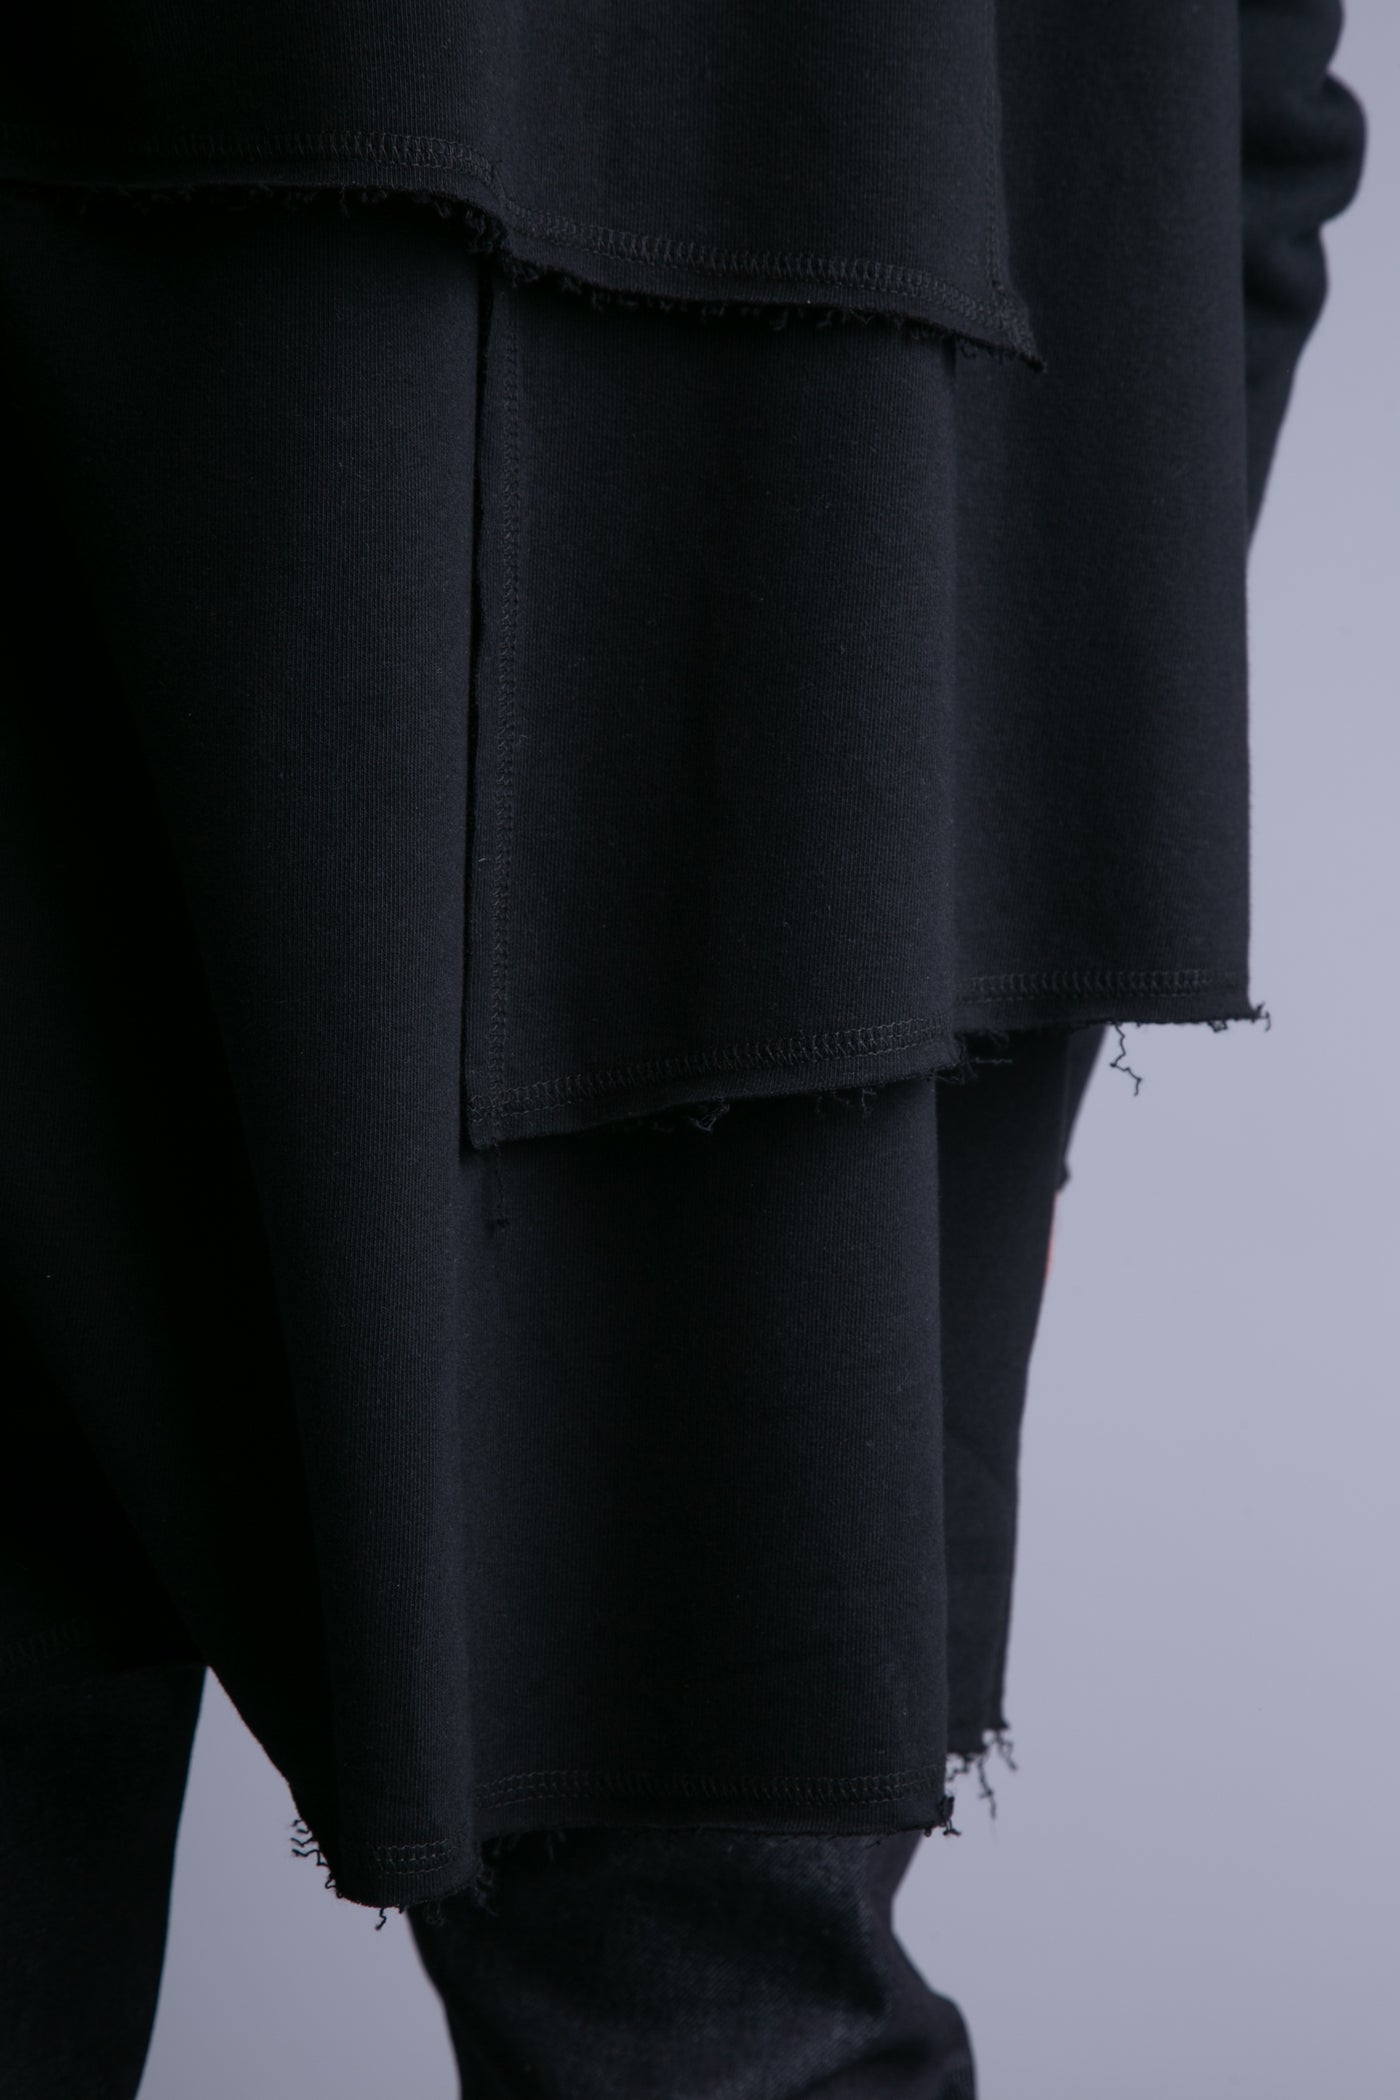 Layered cardigan for men, long sleeves | Black